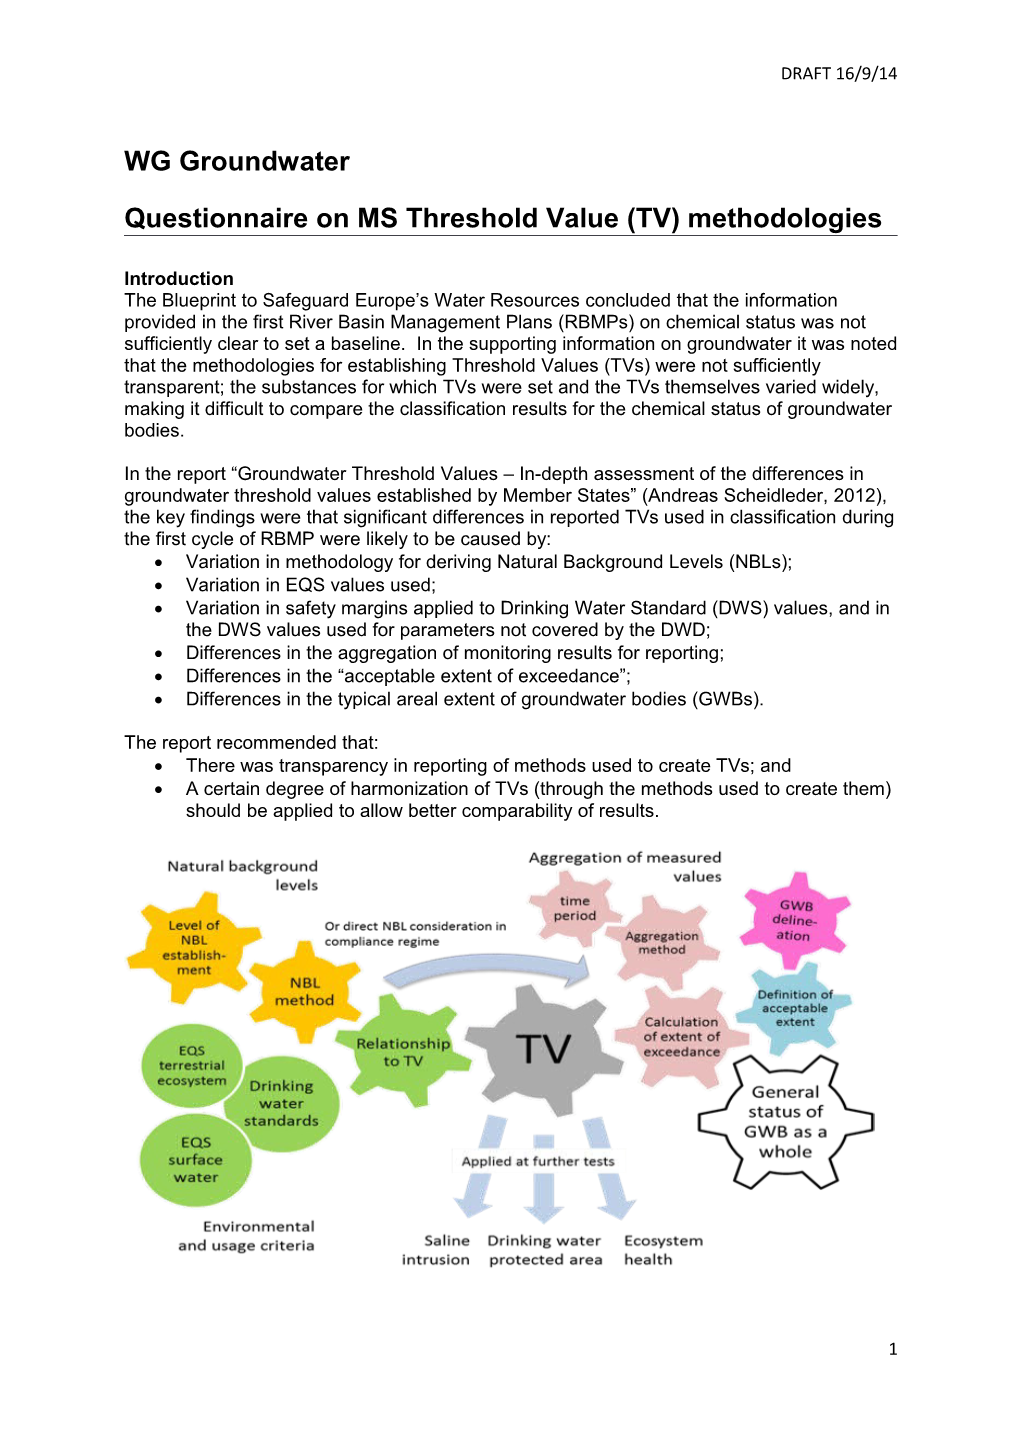 Questionnaire on MS Threshold Value (TV)Methodologies